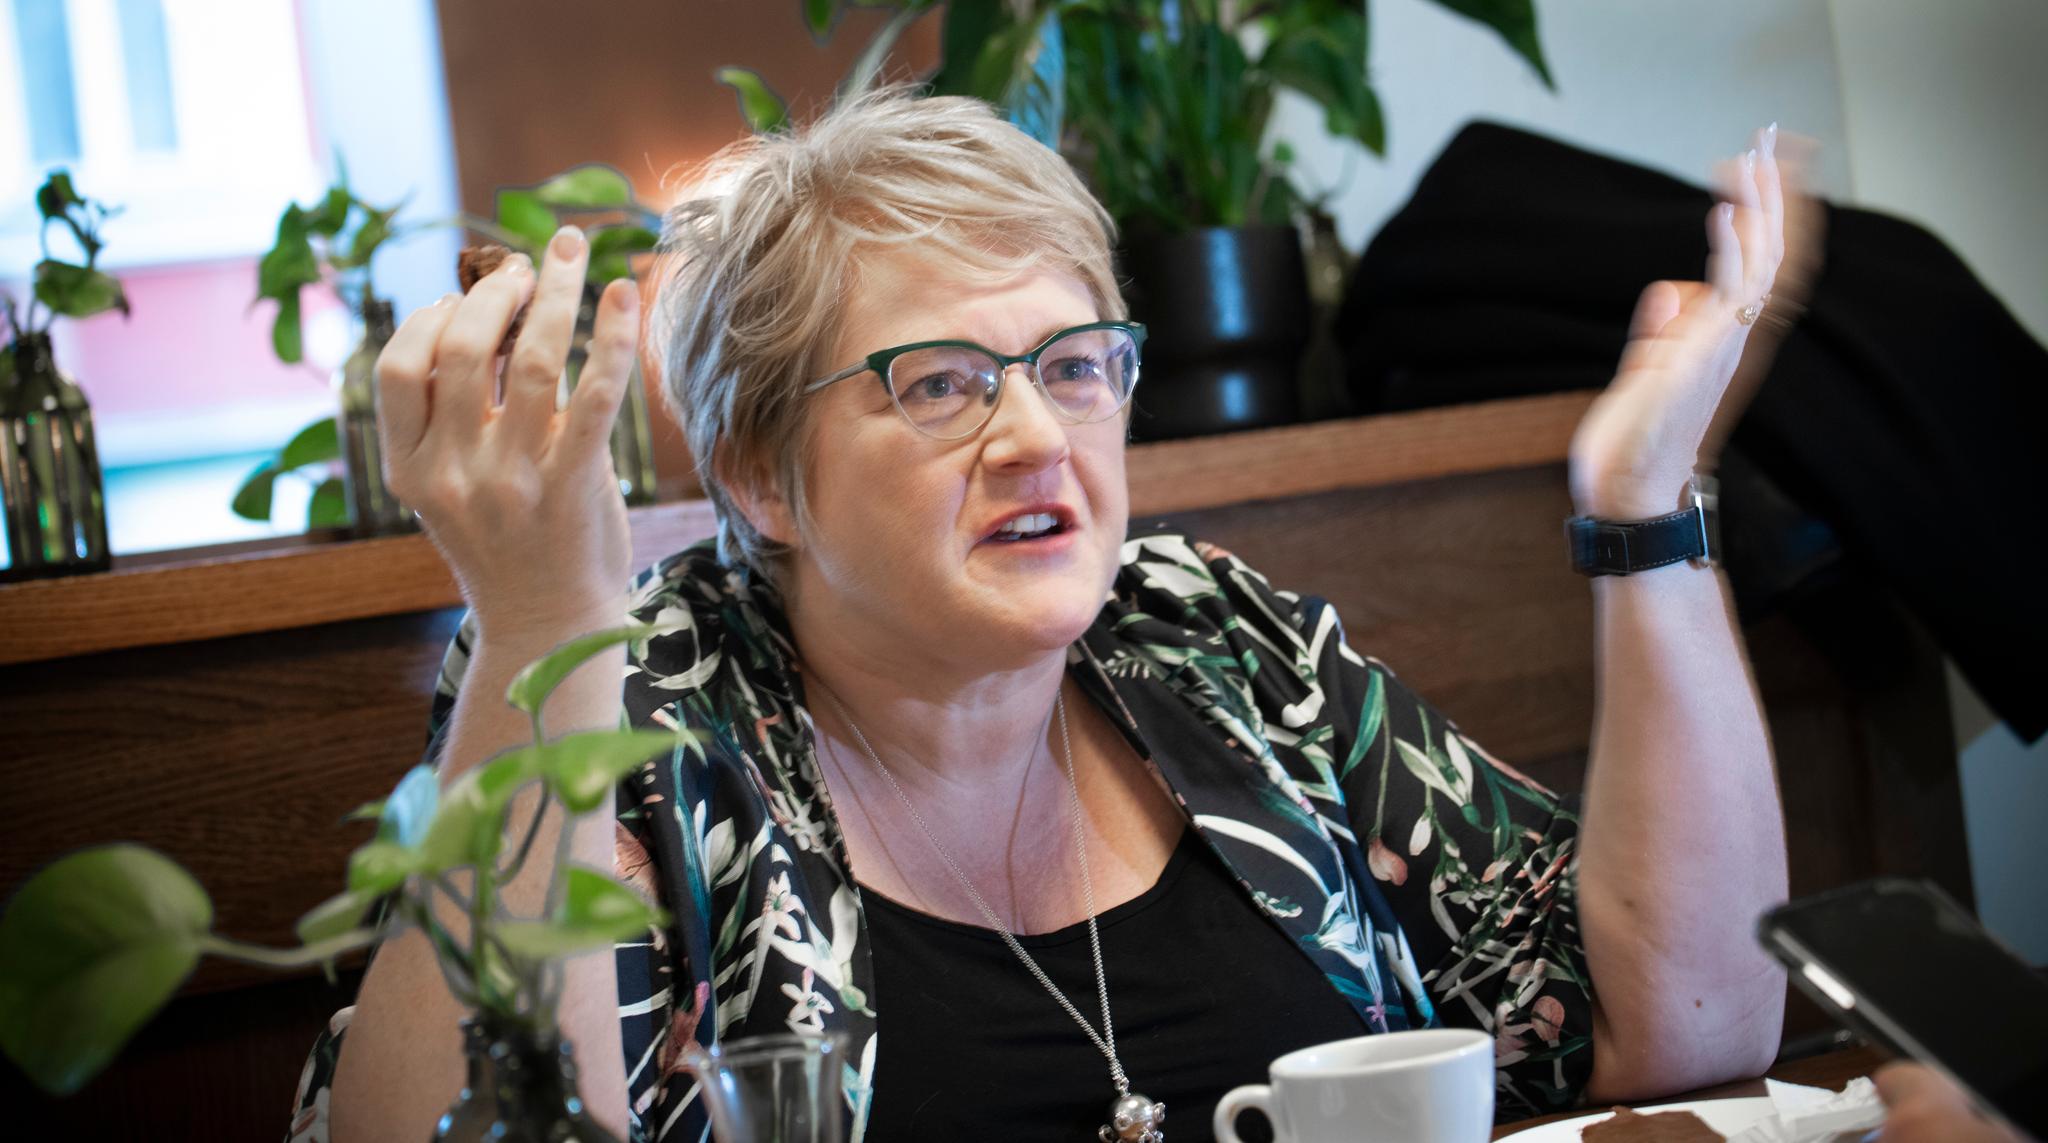 Venstre-leder Trine Skei Grande møter i helgen partiet sitt på en landskonferanse på Fornebu.